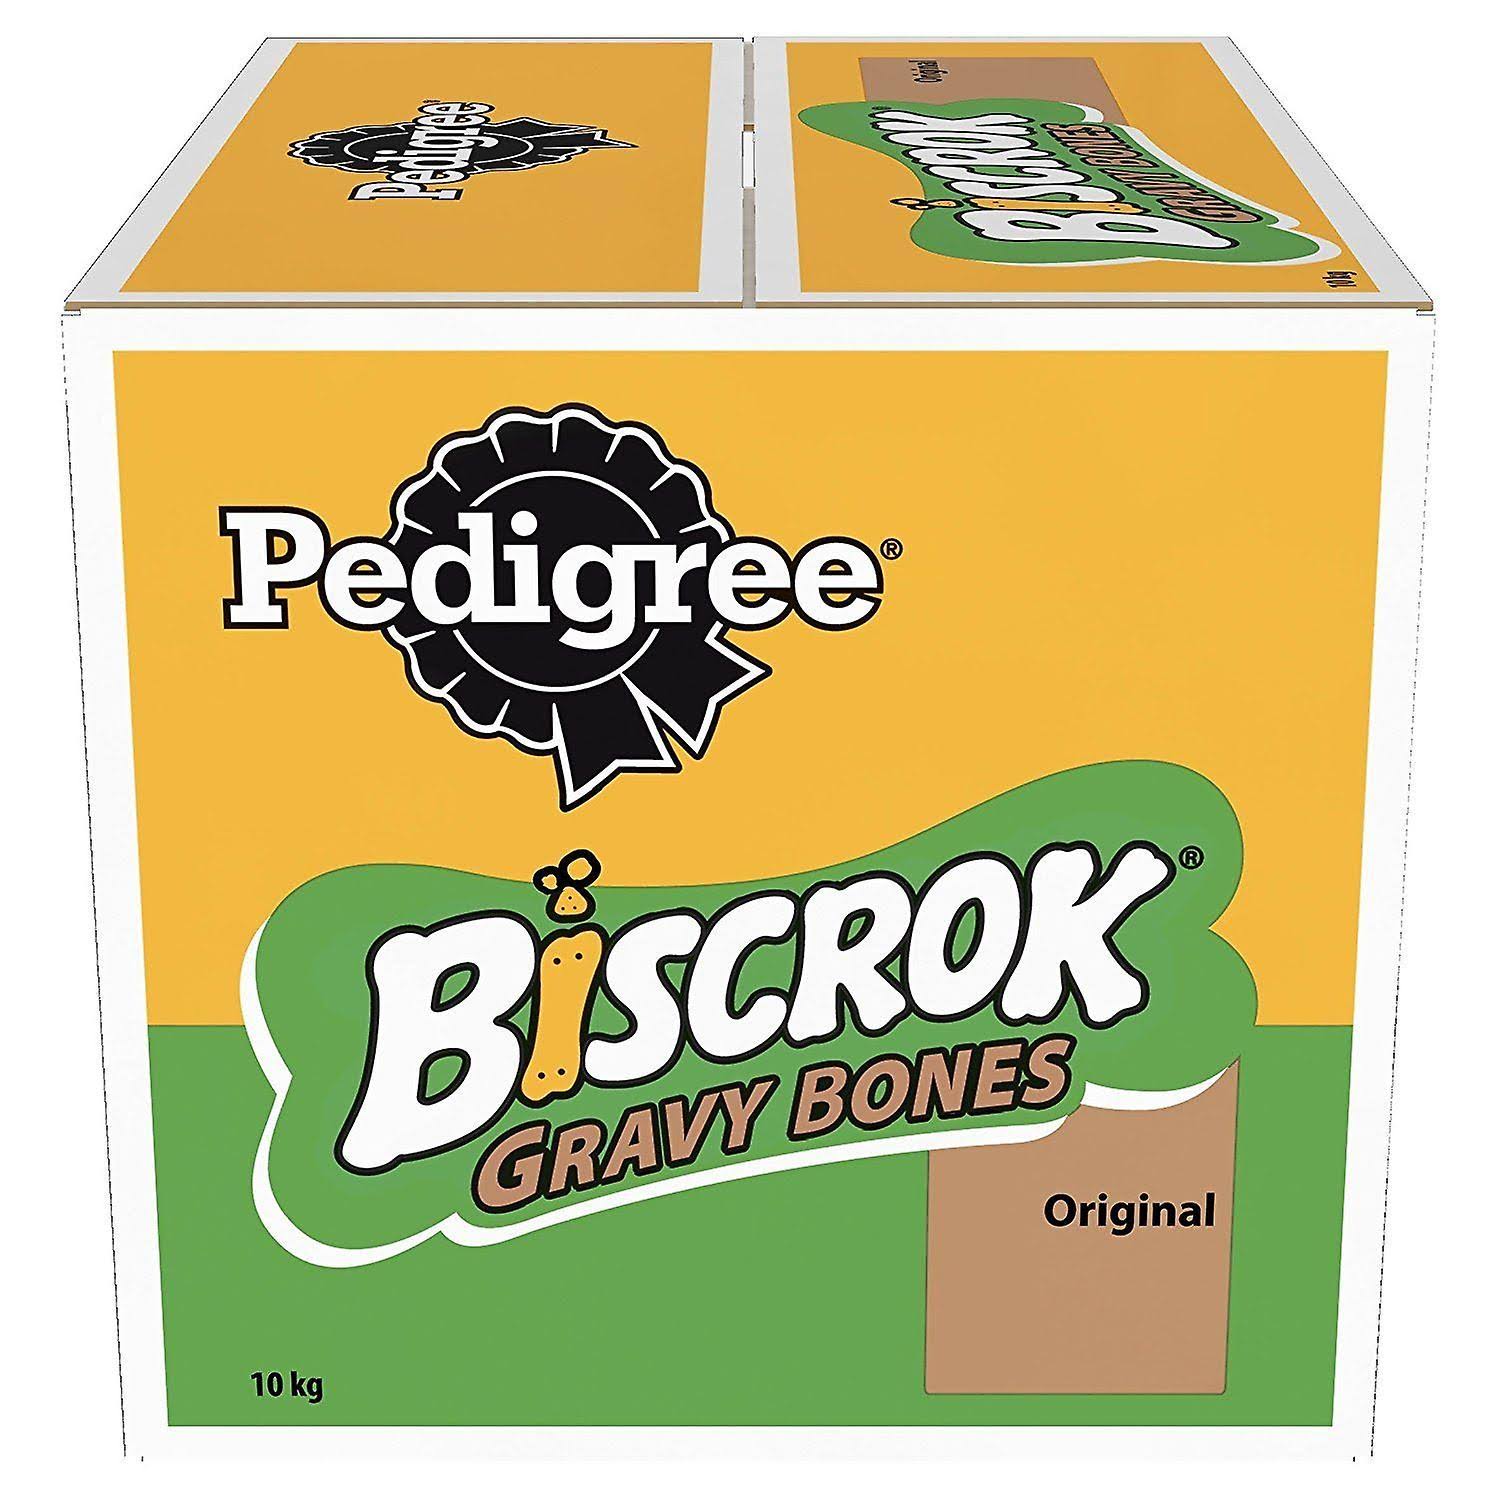 Pedigree Biscrok Gravy Bones Biscuits Dog Treats - Original, 10kg